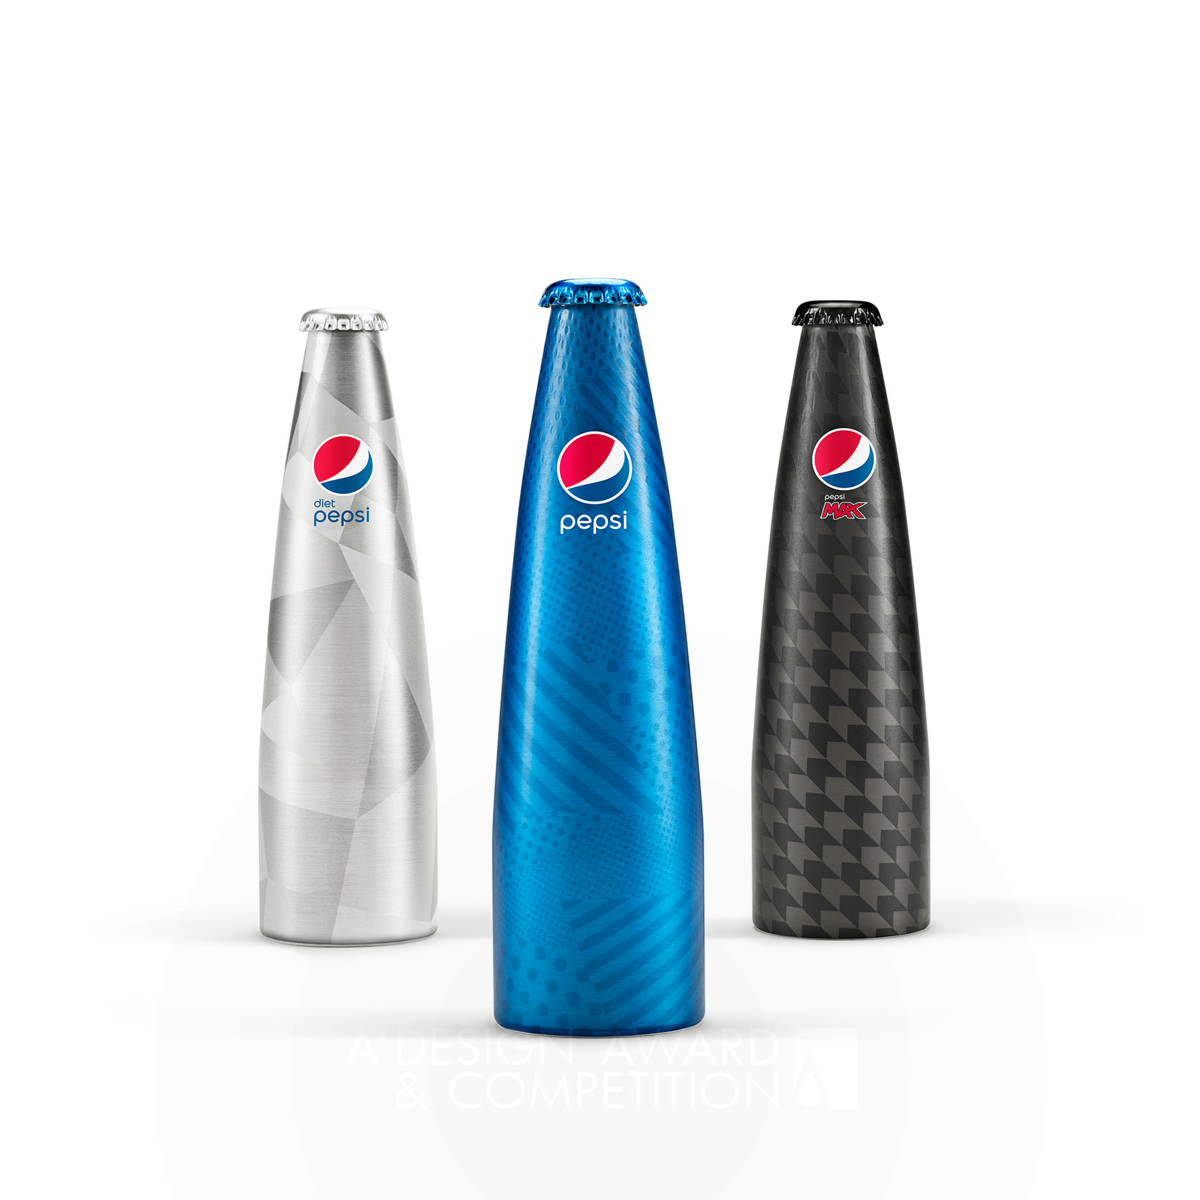 Pepsi Prestige Aluminum Bottle by PepsiCo Design and Innovation Platinum Packaging Design Award Winner 2017 